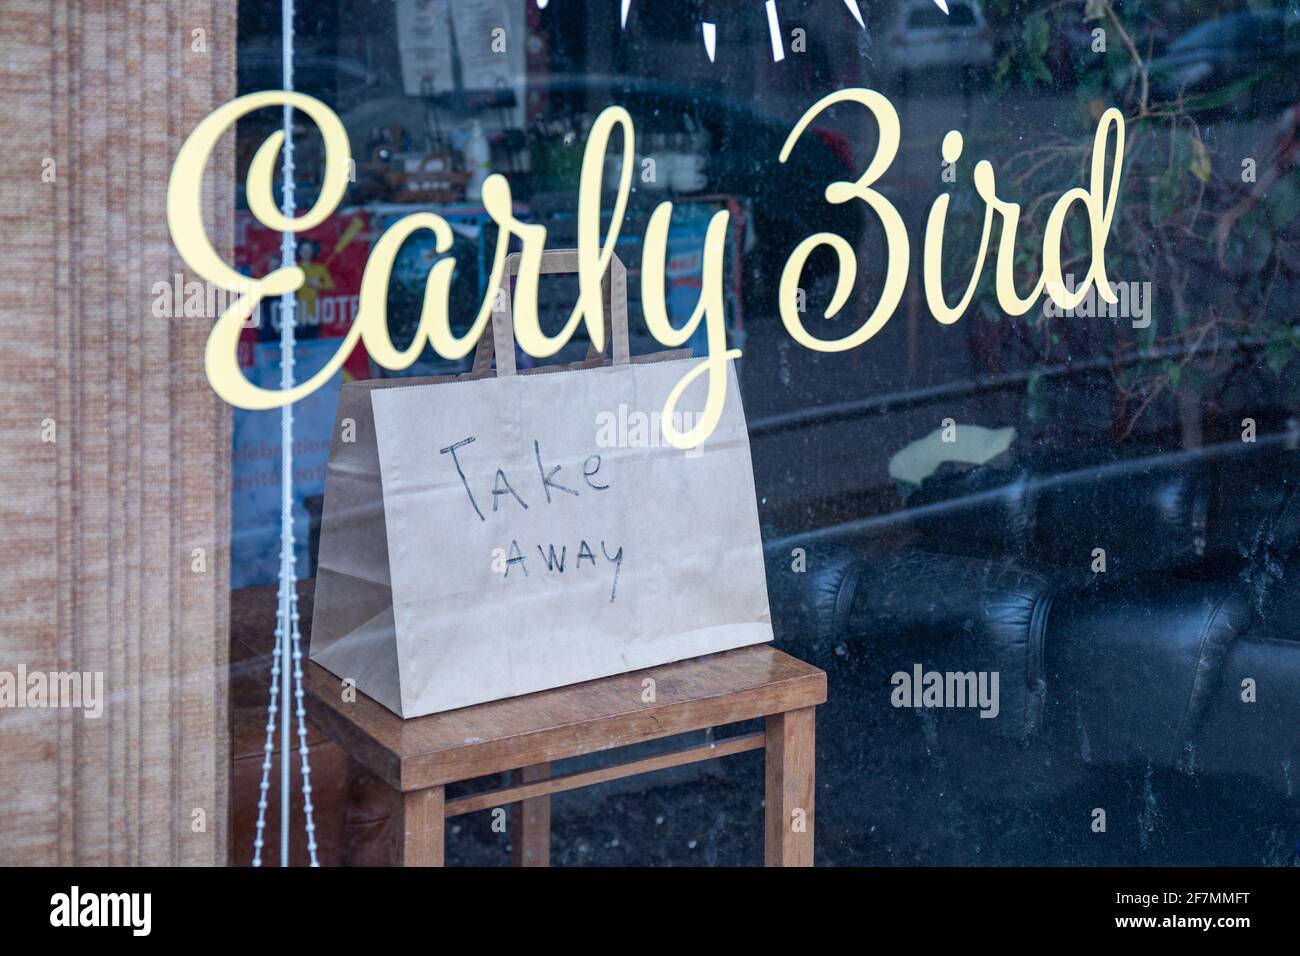 Café Early Bird advertising take away option during restaurant lockdown in Kallio district of Helsinki, Finland Stock Photo